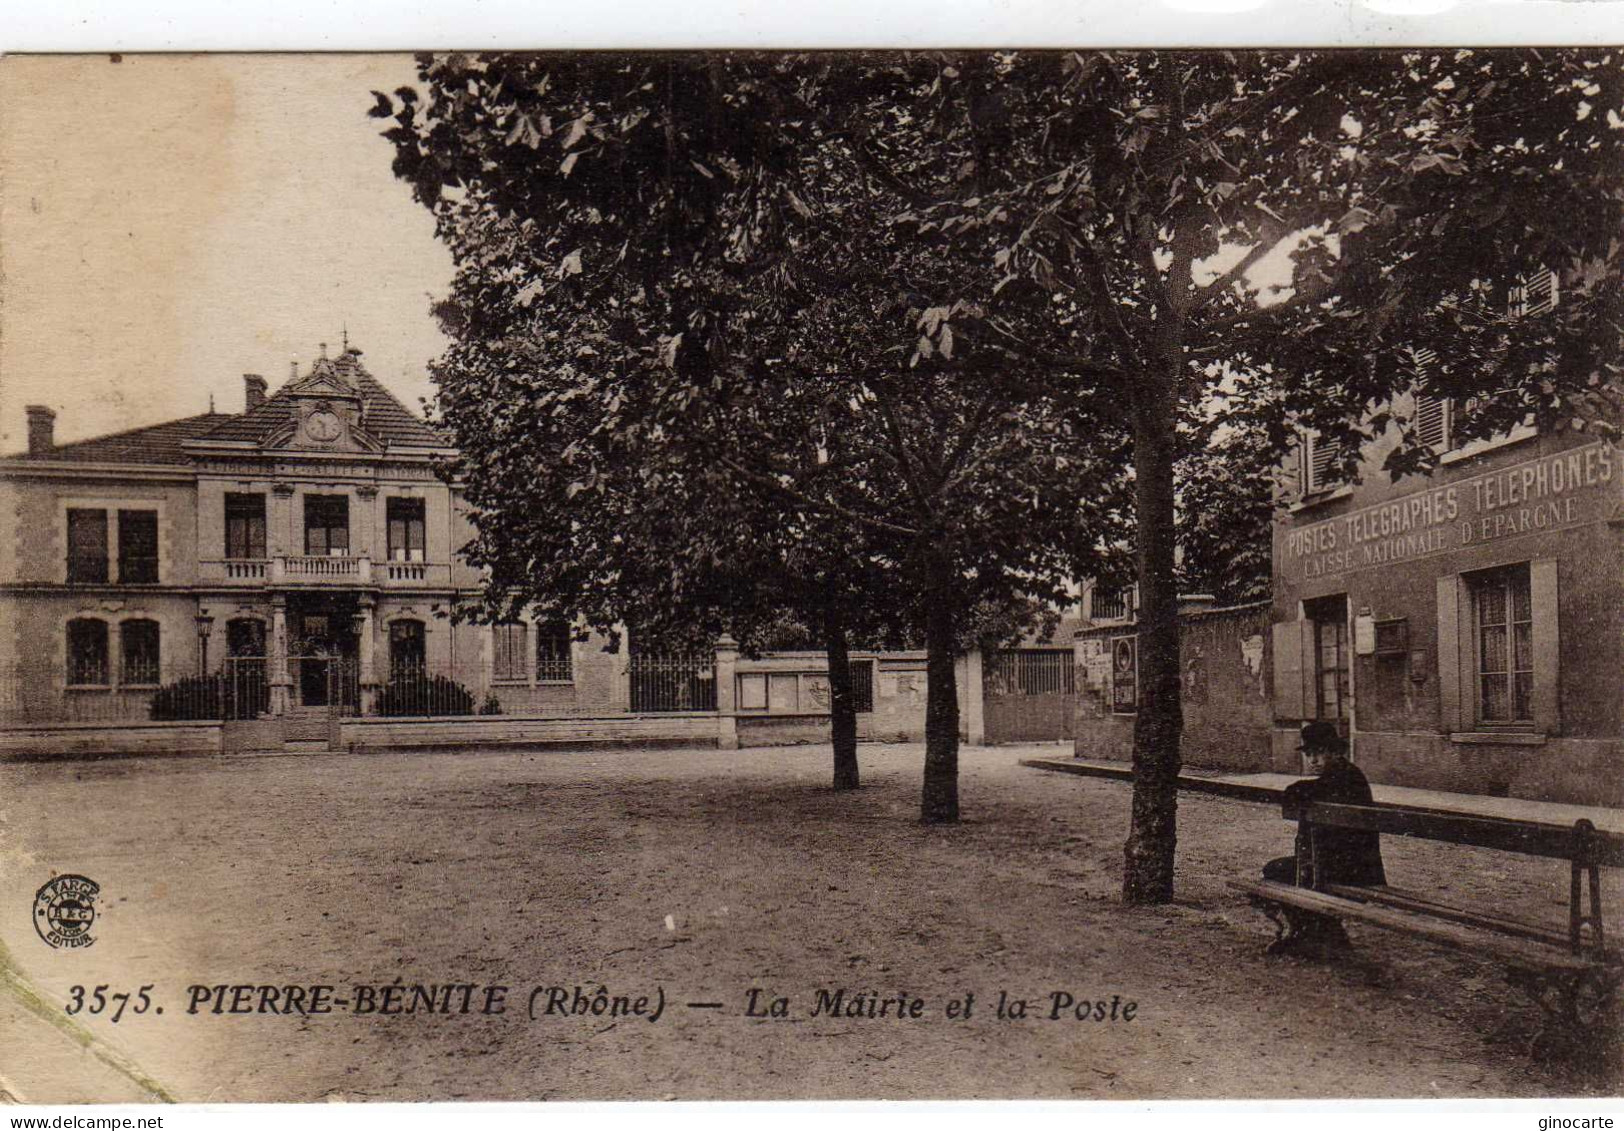 Pierre Benite La Mairie Et La Poste - Pierre Benite